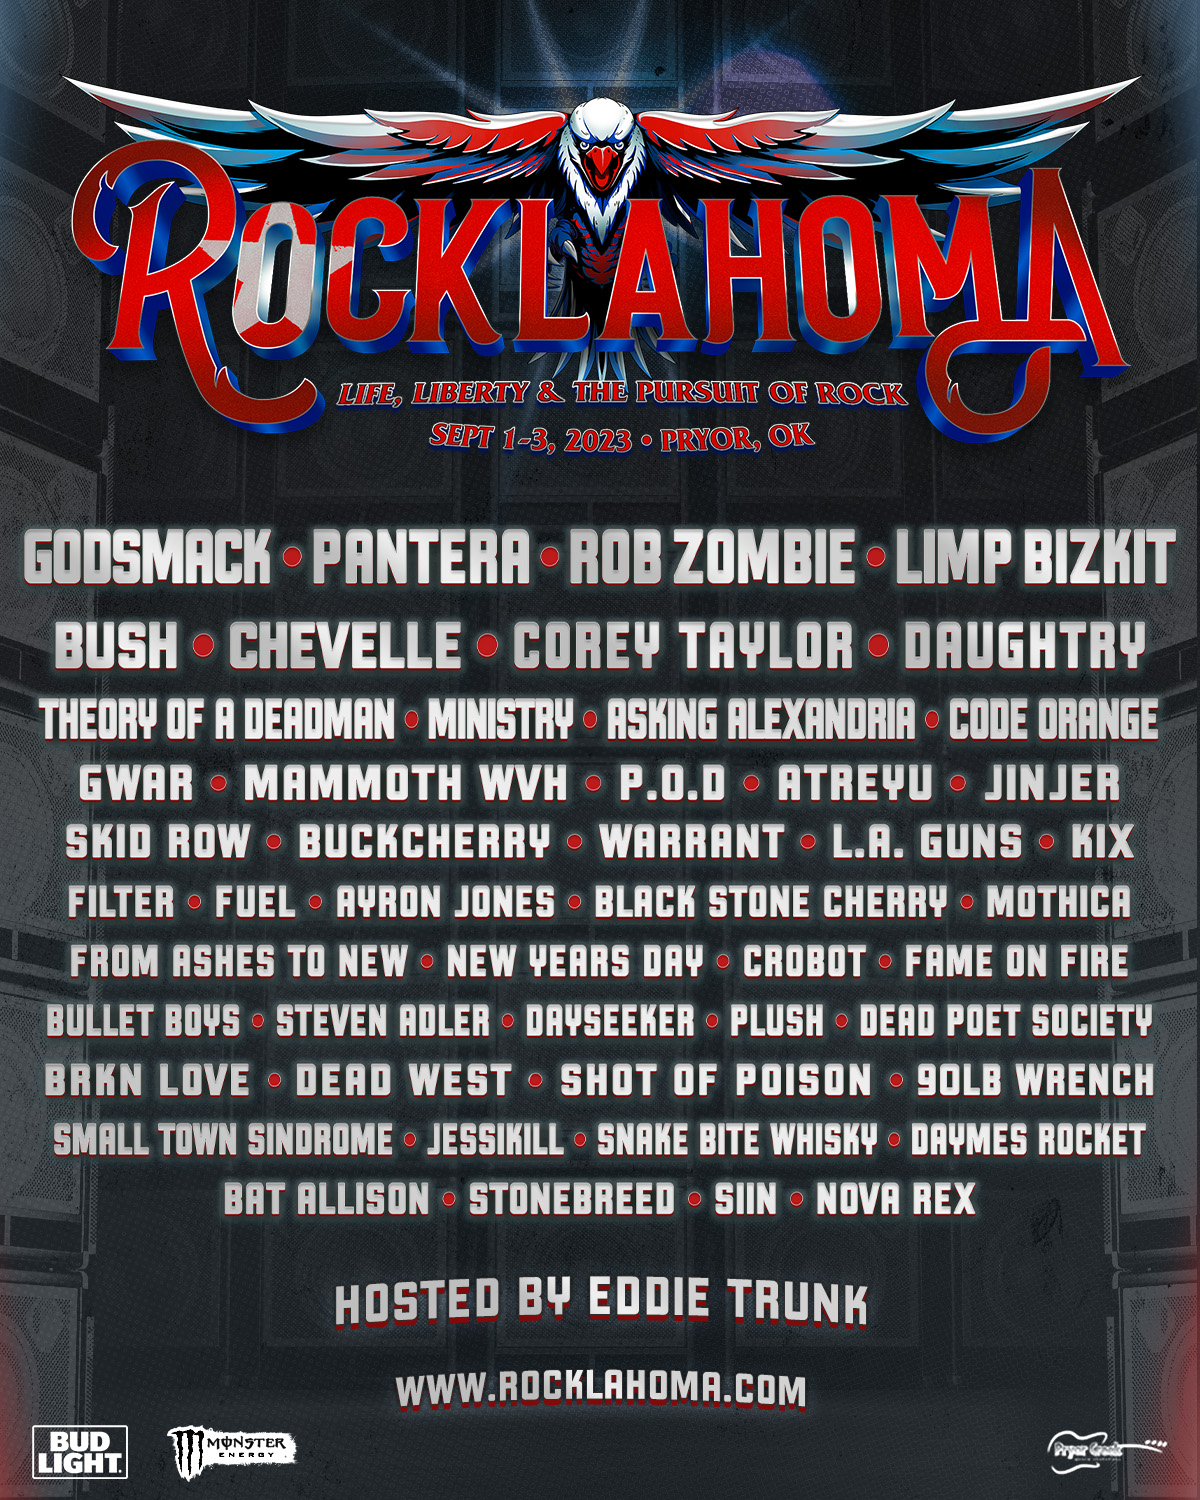 Rocklahoma Godsmack, Pantera, Rob Zombie Lead 2023 Lineup The Rock